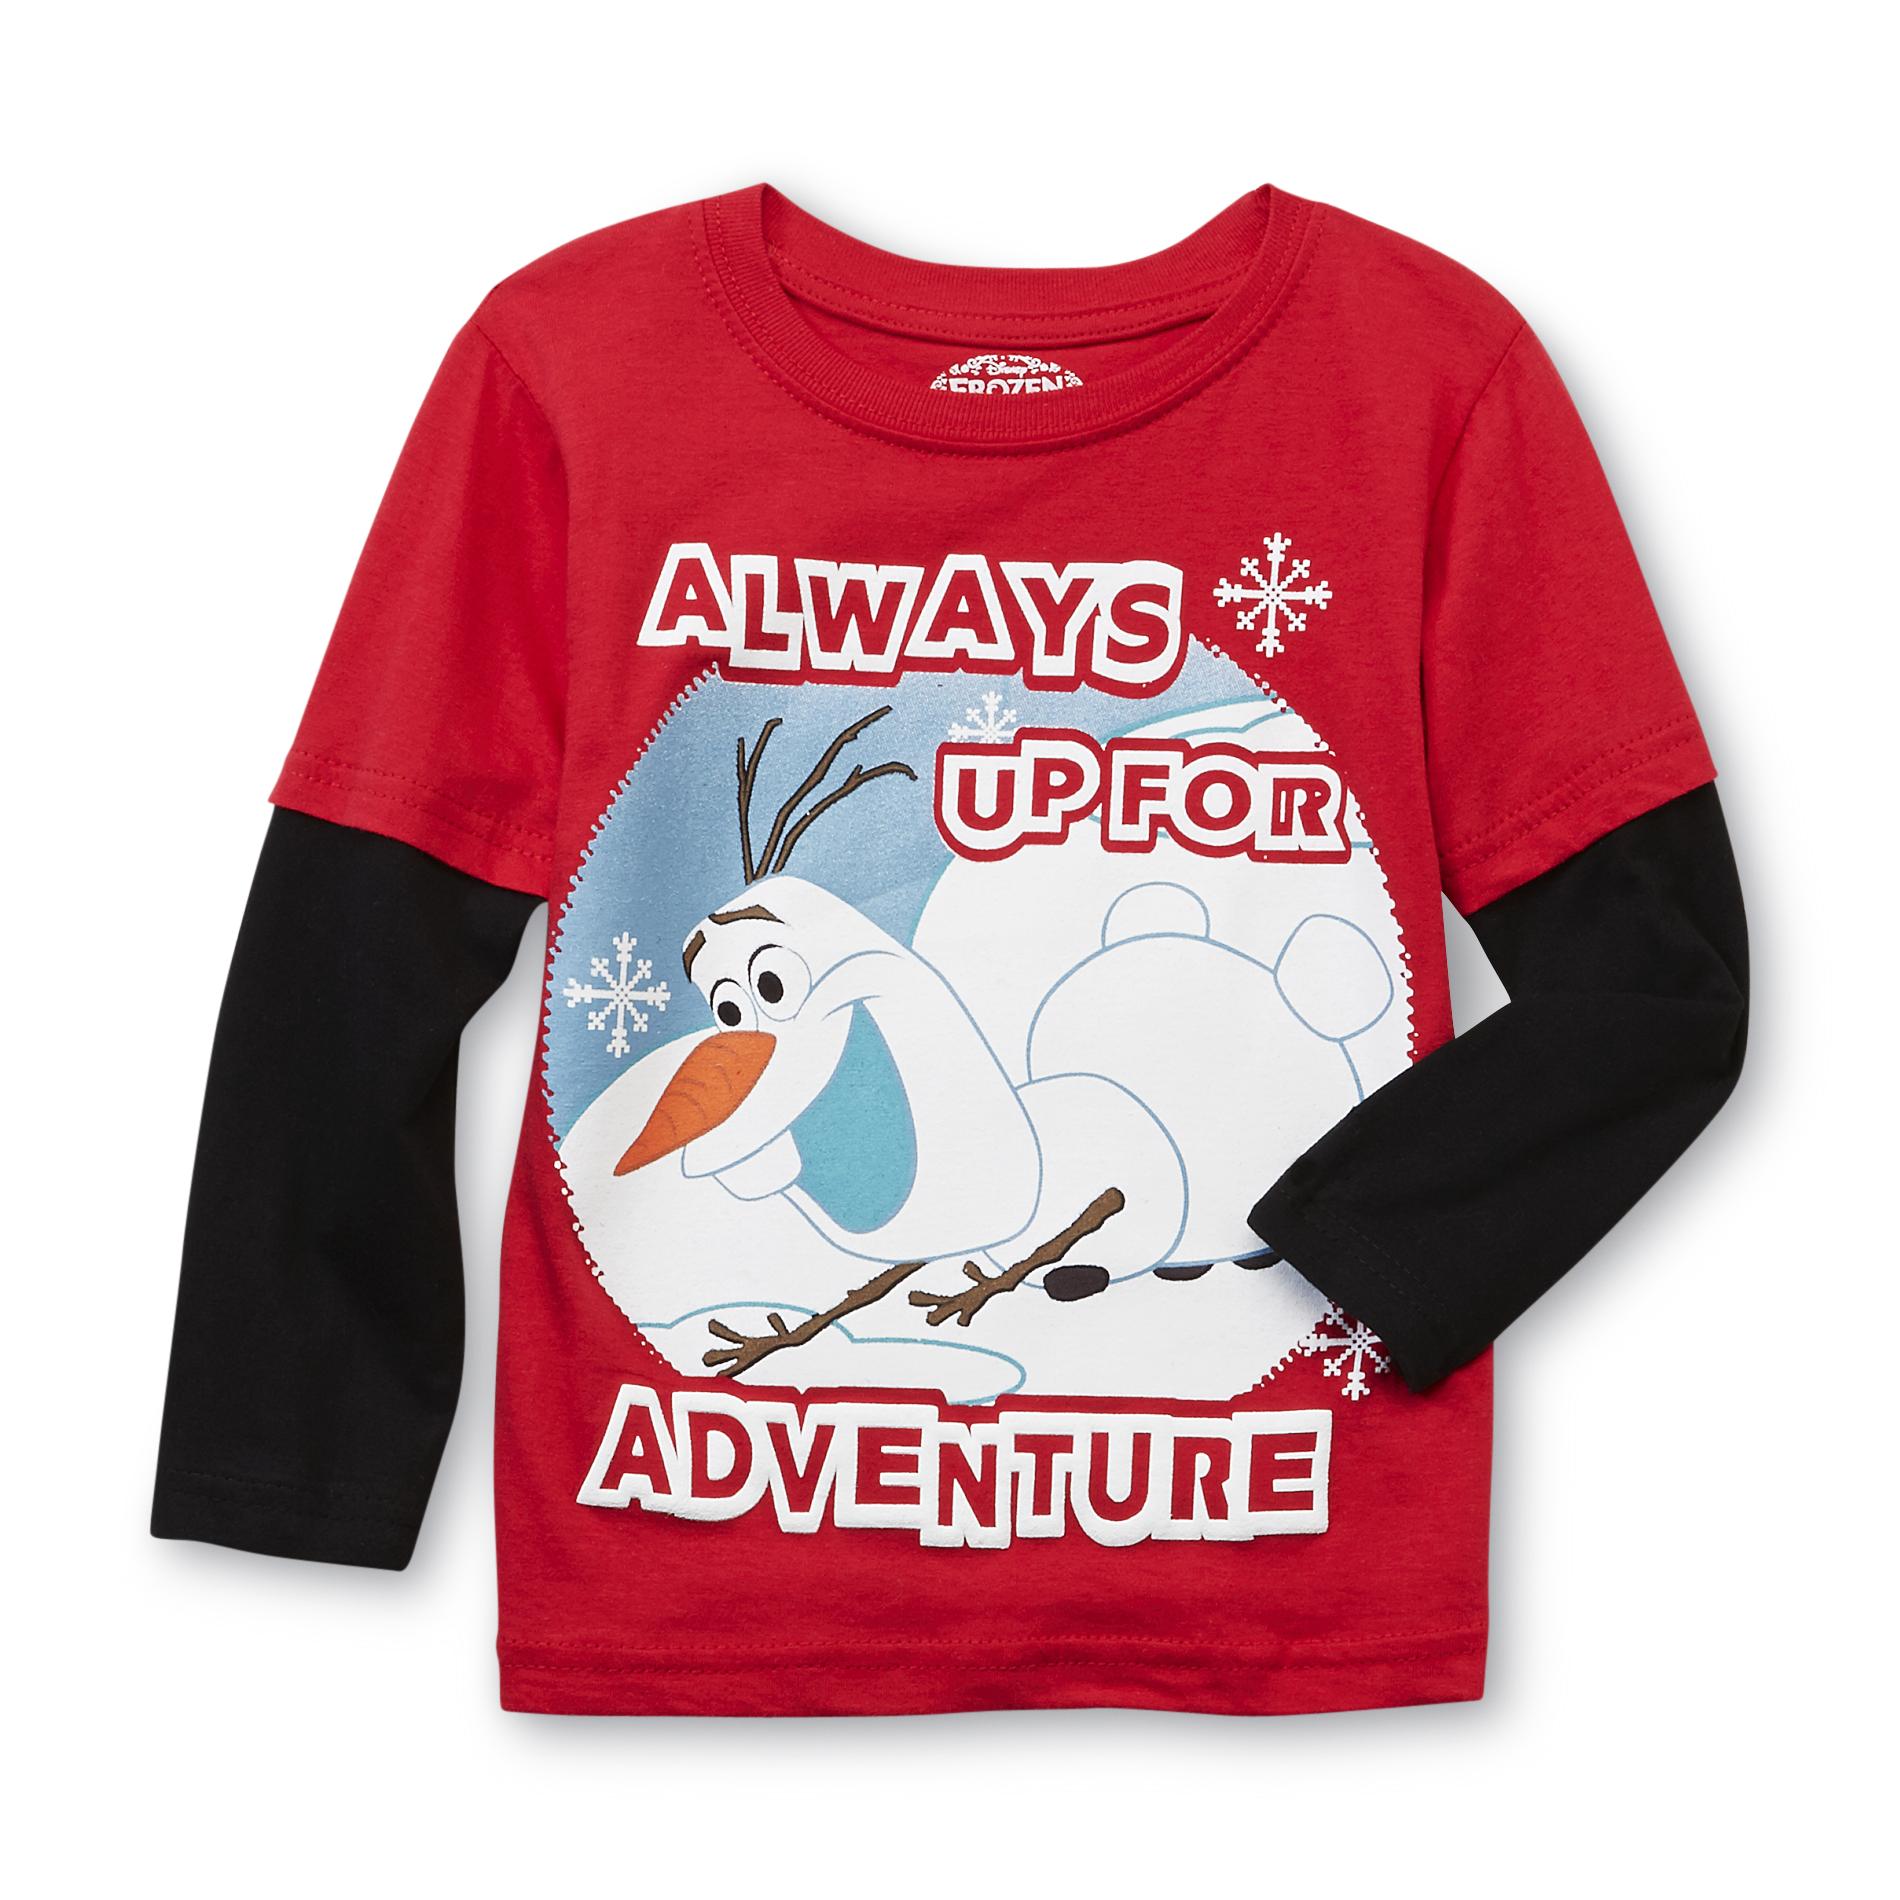 Disney Frozen Toddler Boy's Graphic T-Shirt - Olaf